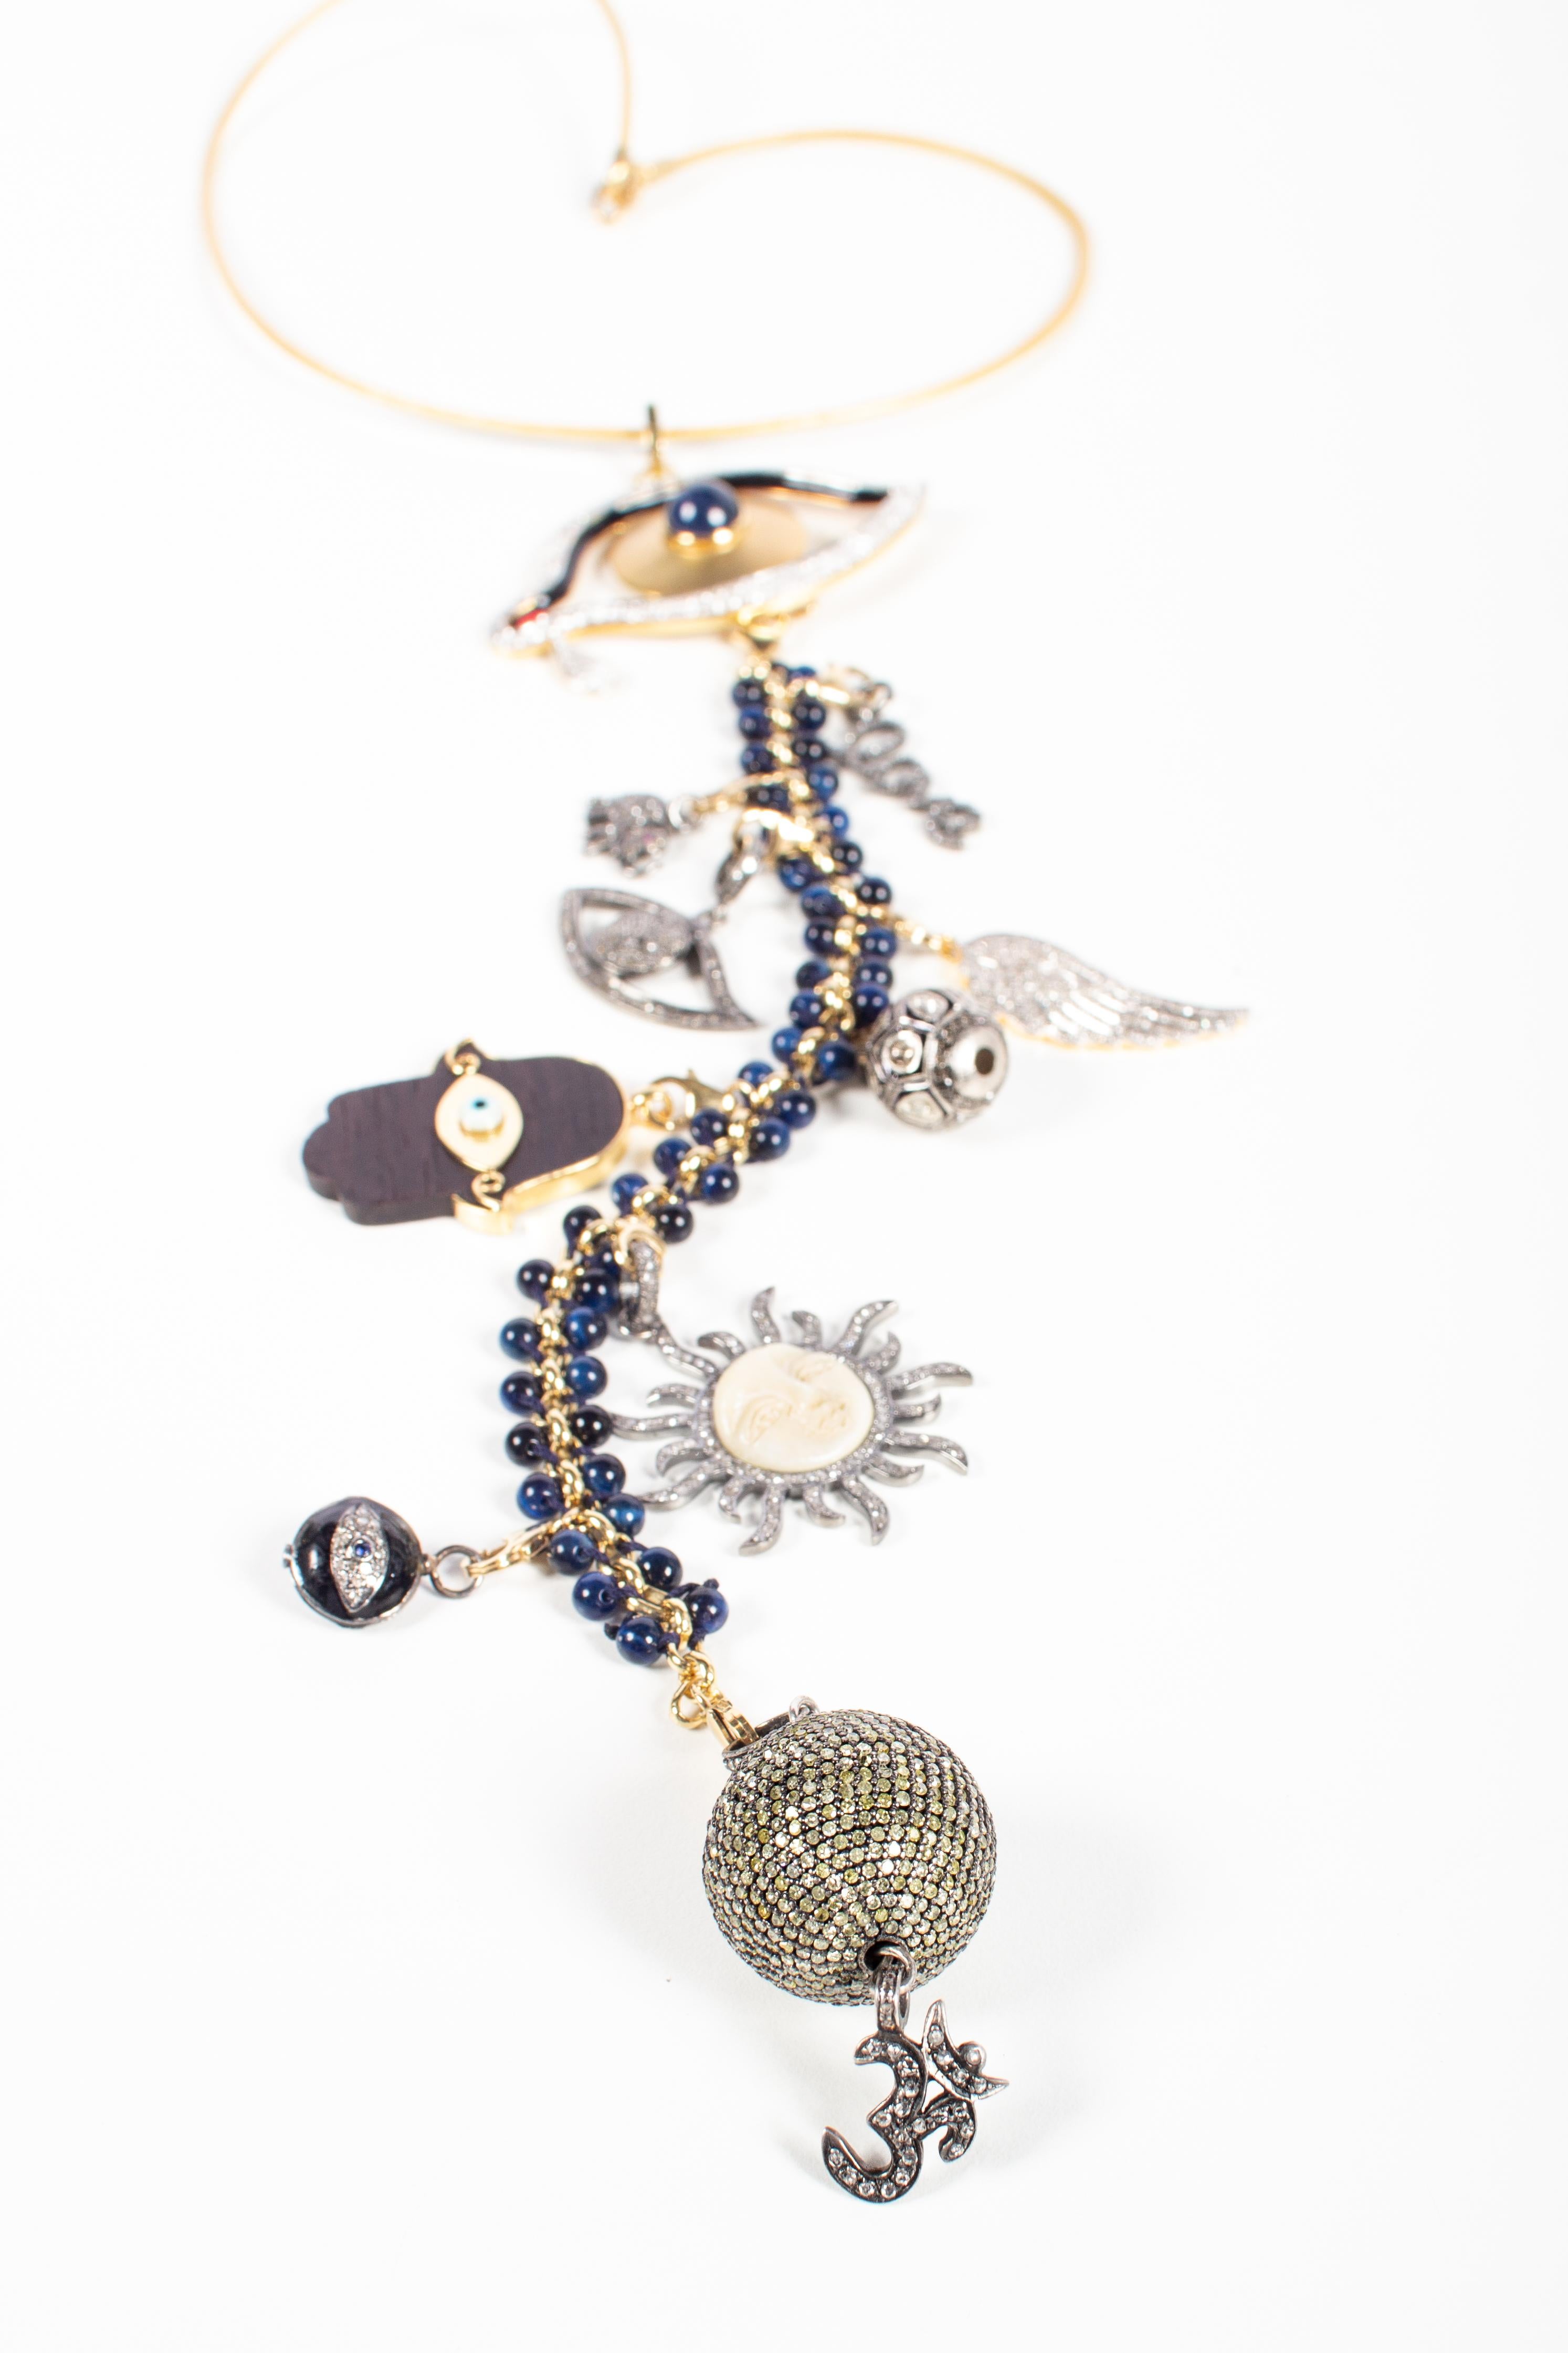 Contemporary Clarissa Bronfman 'Dali's Girl' Symbol Tree Necklace Sapphire, Diamond, Ebony